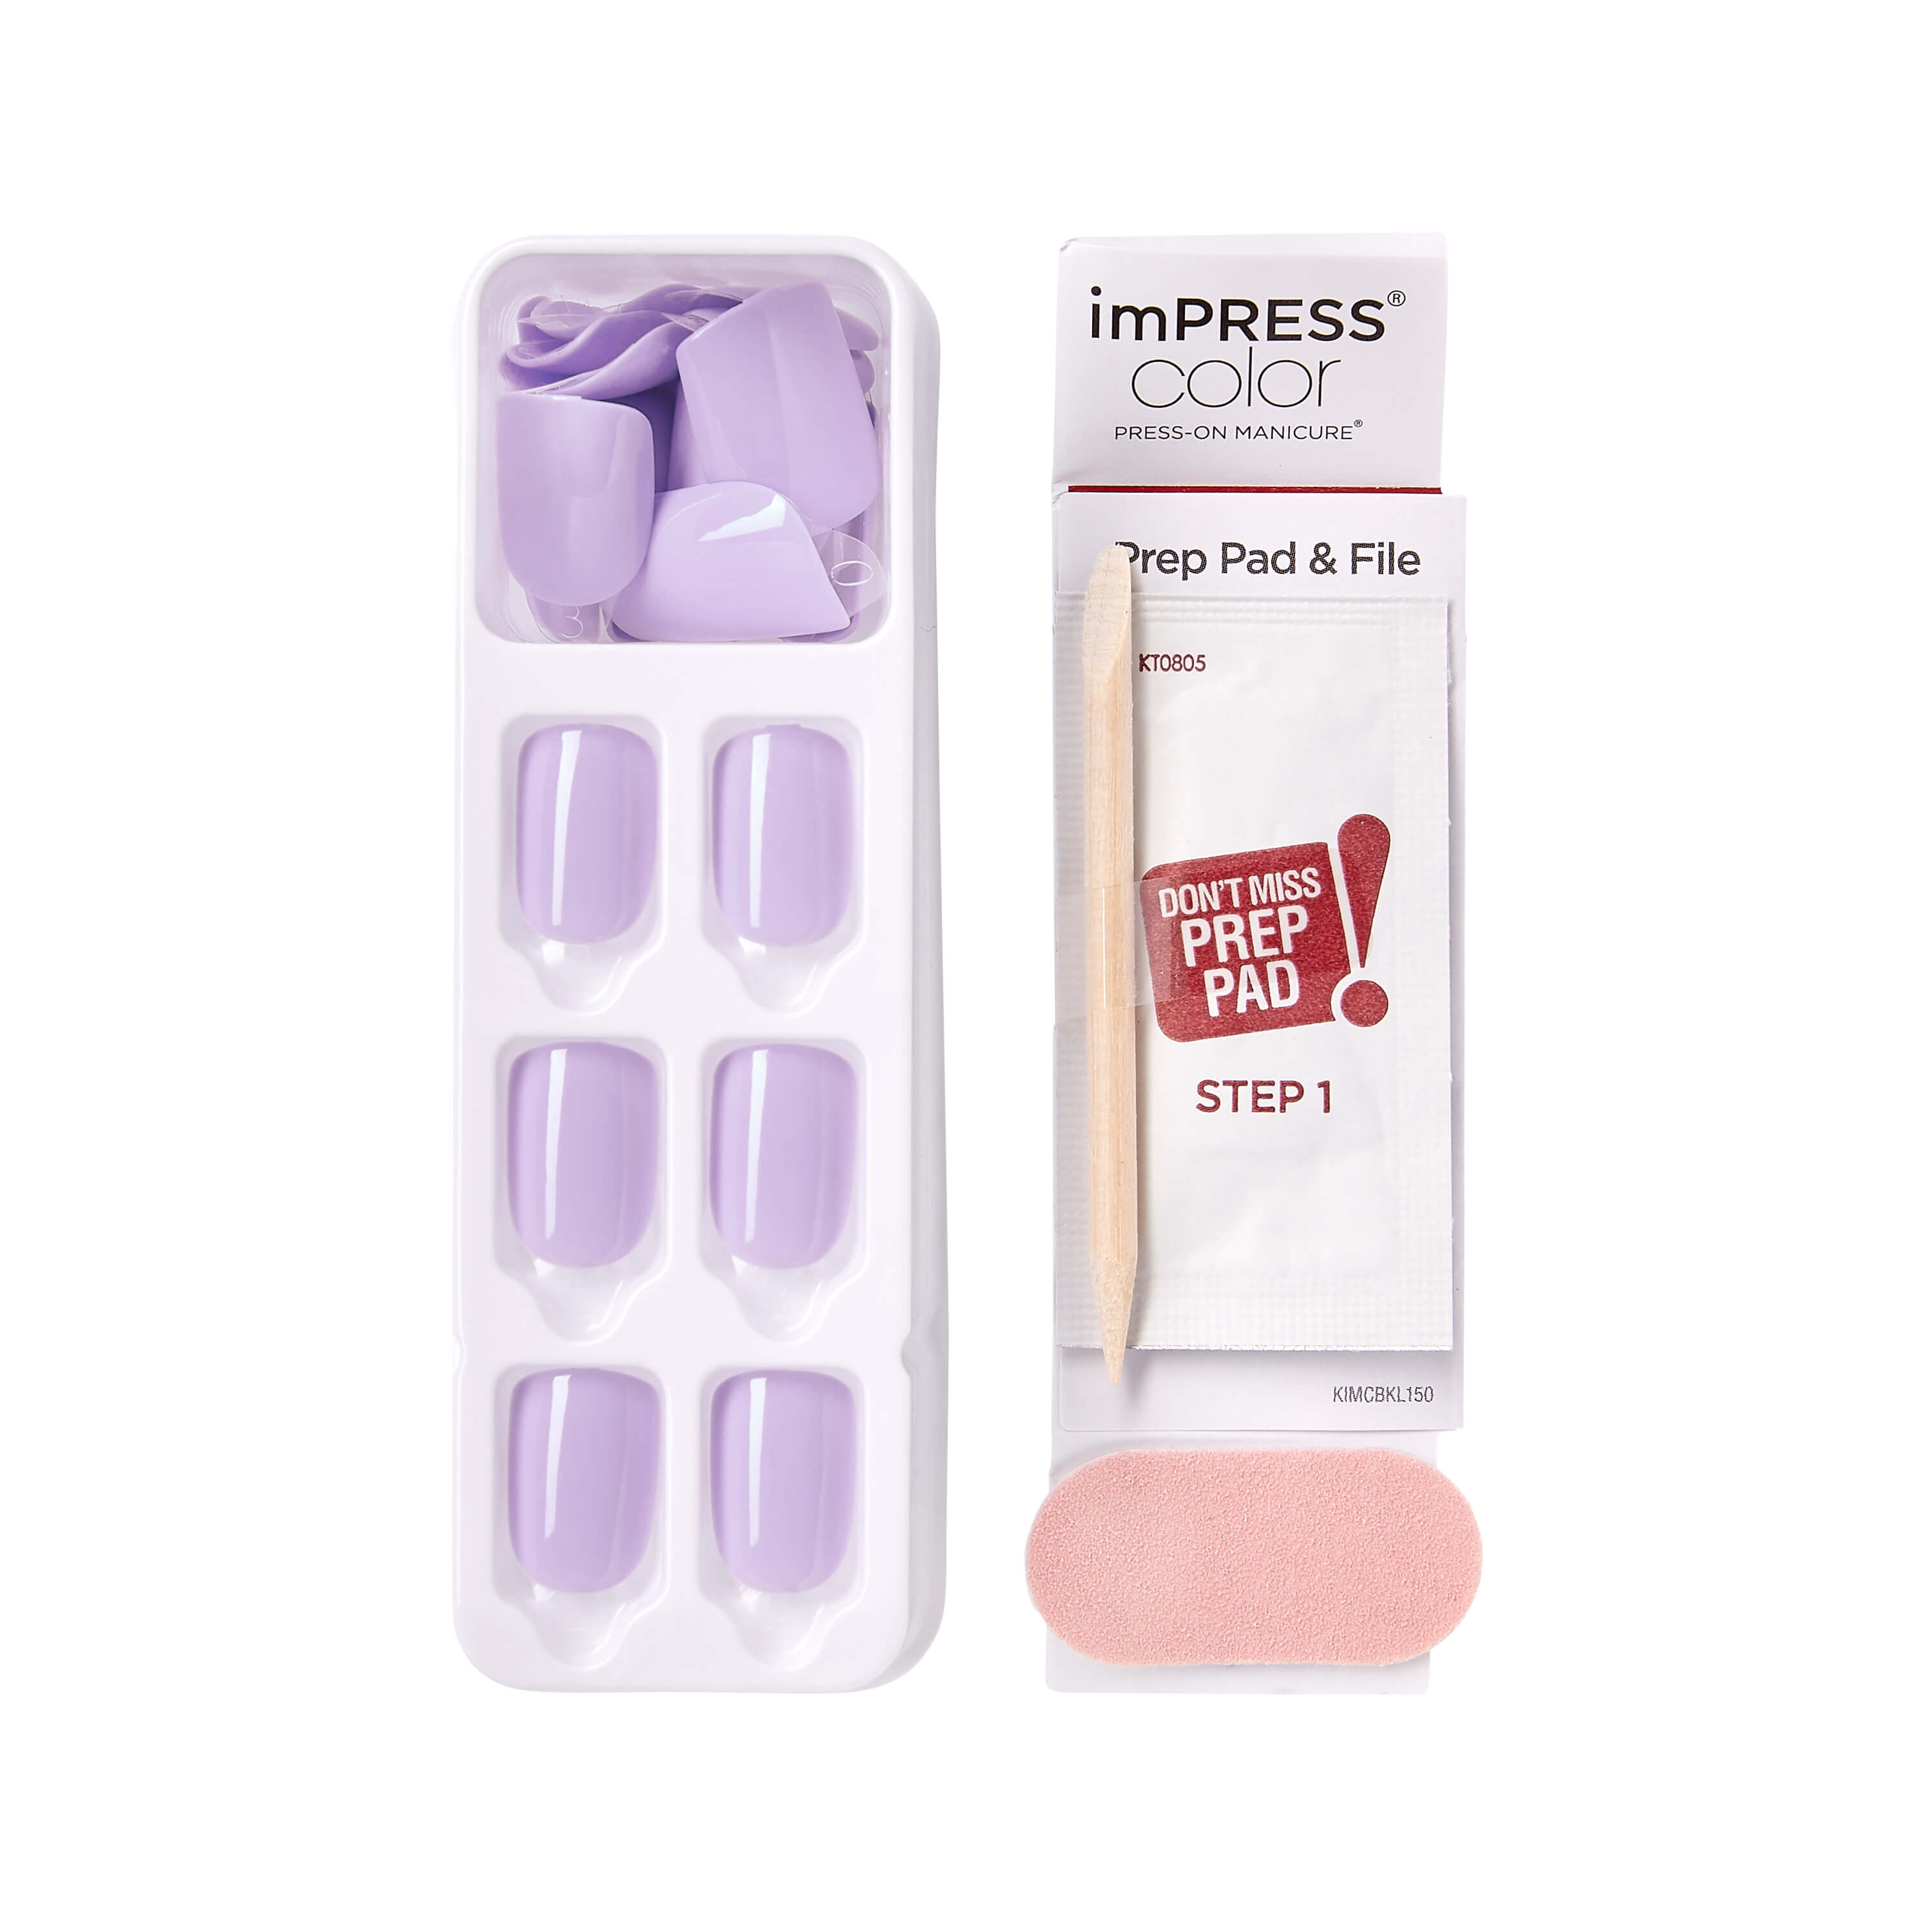 imPRESS Color Press-On Manicure - Picture Purplect